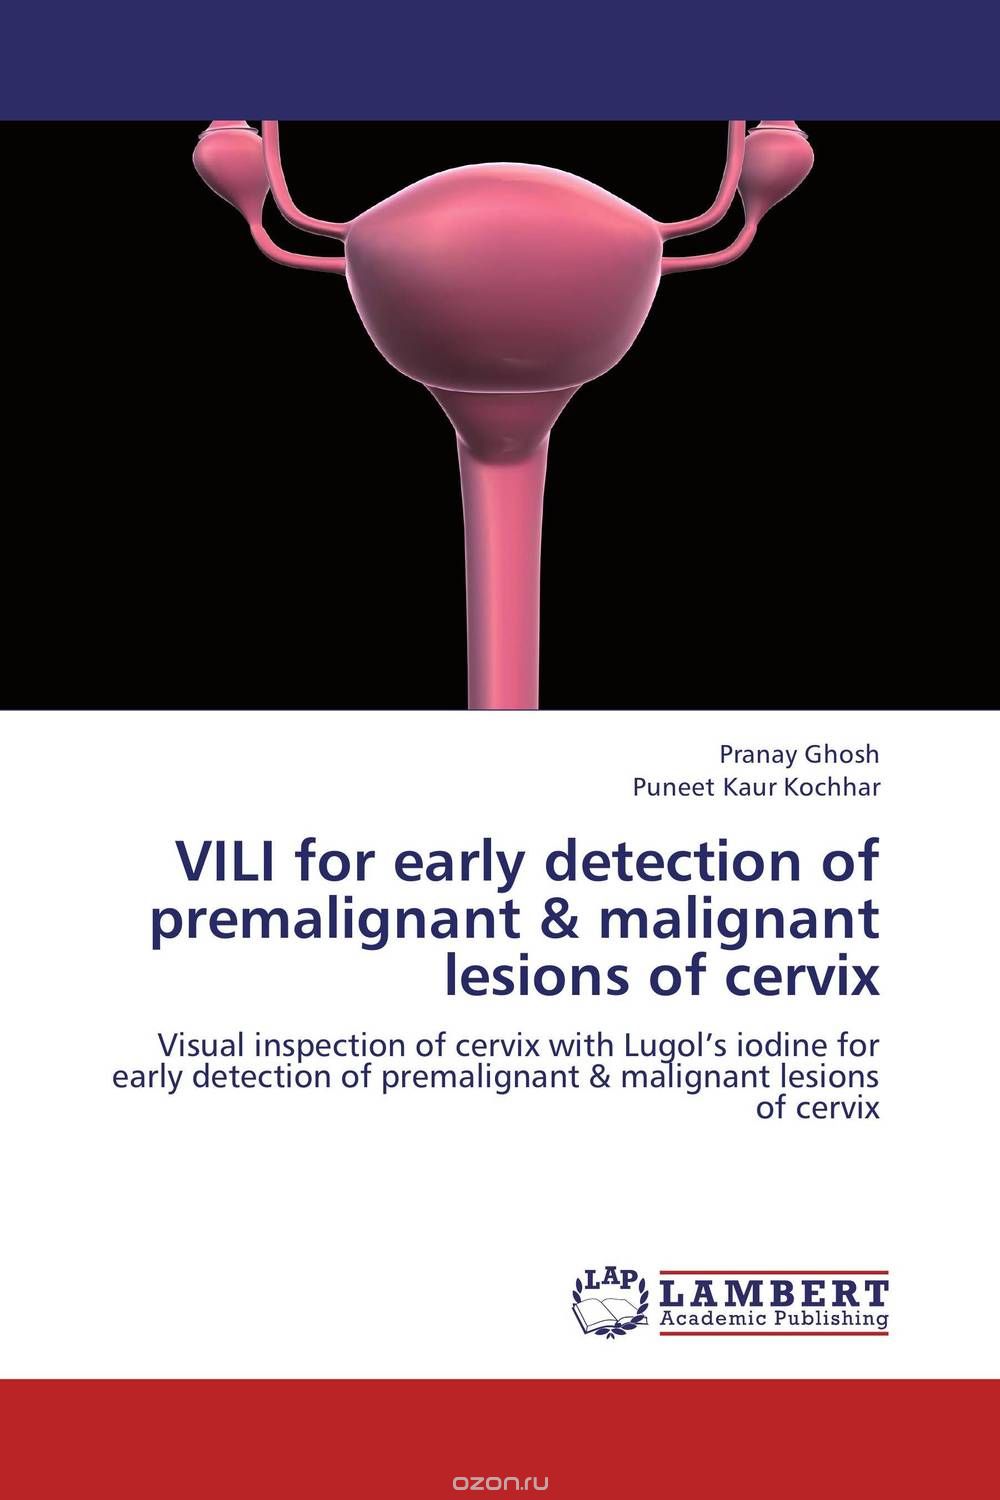 Скачать книгу "VILI for early detection of premalignant & malignant lesions of cervix"